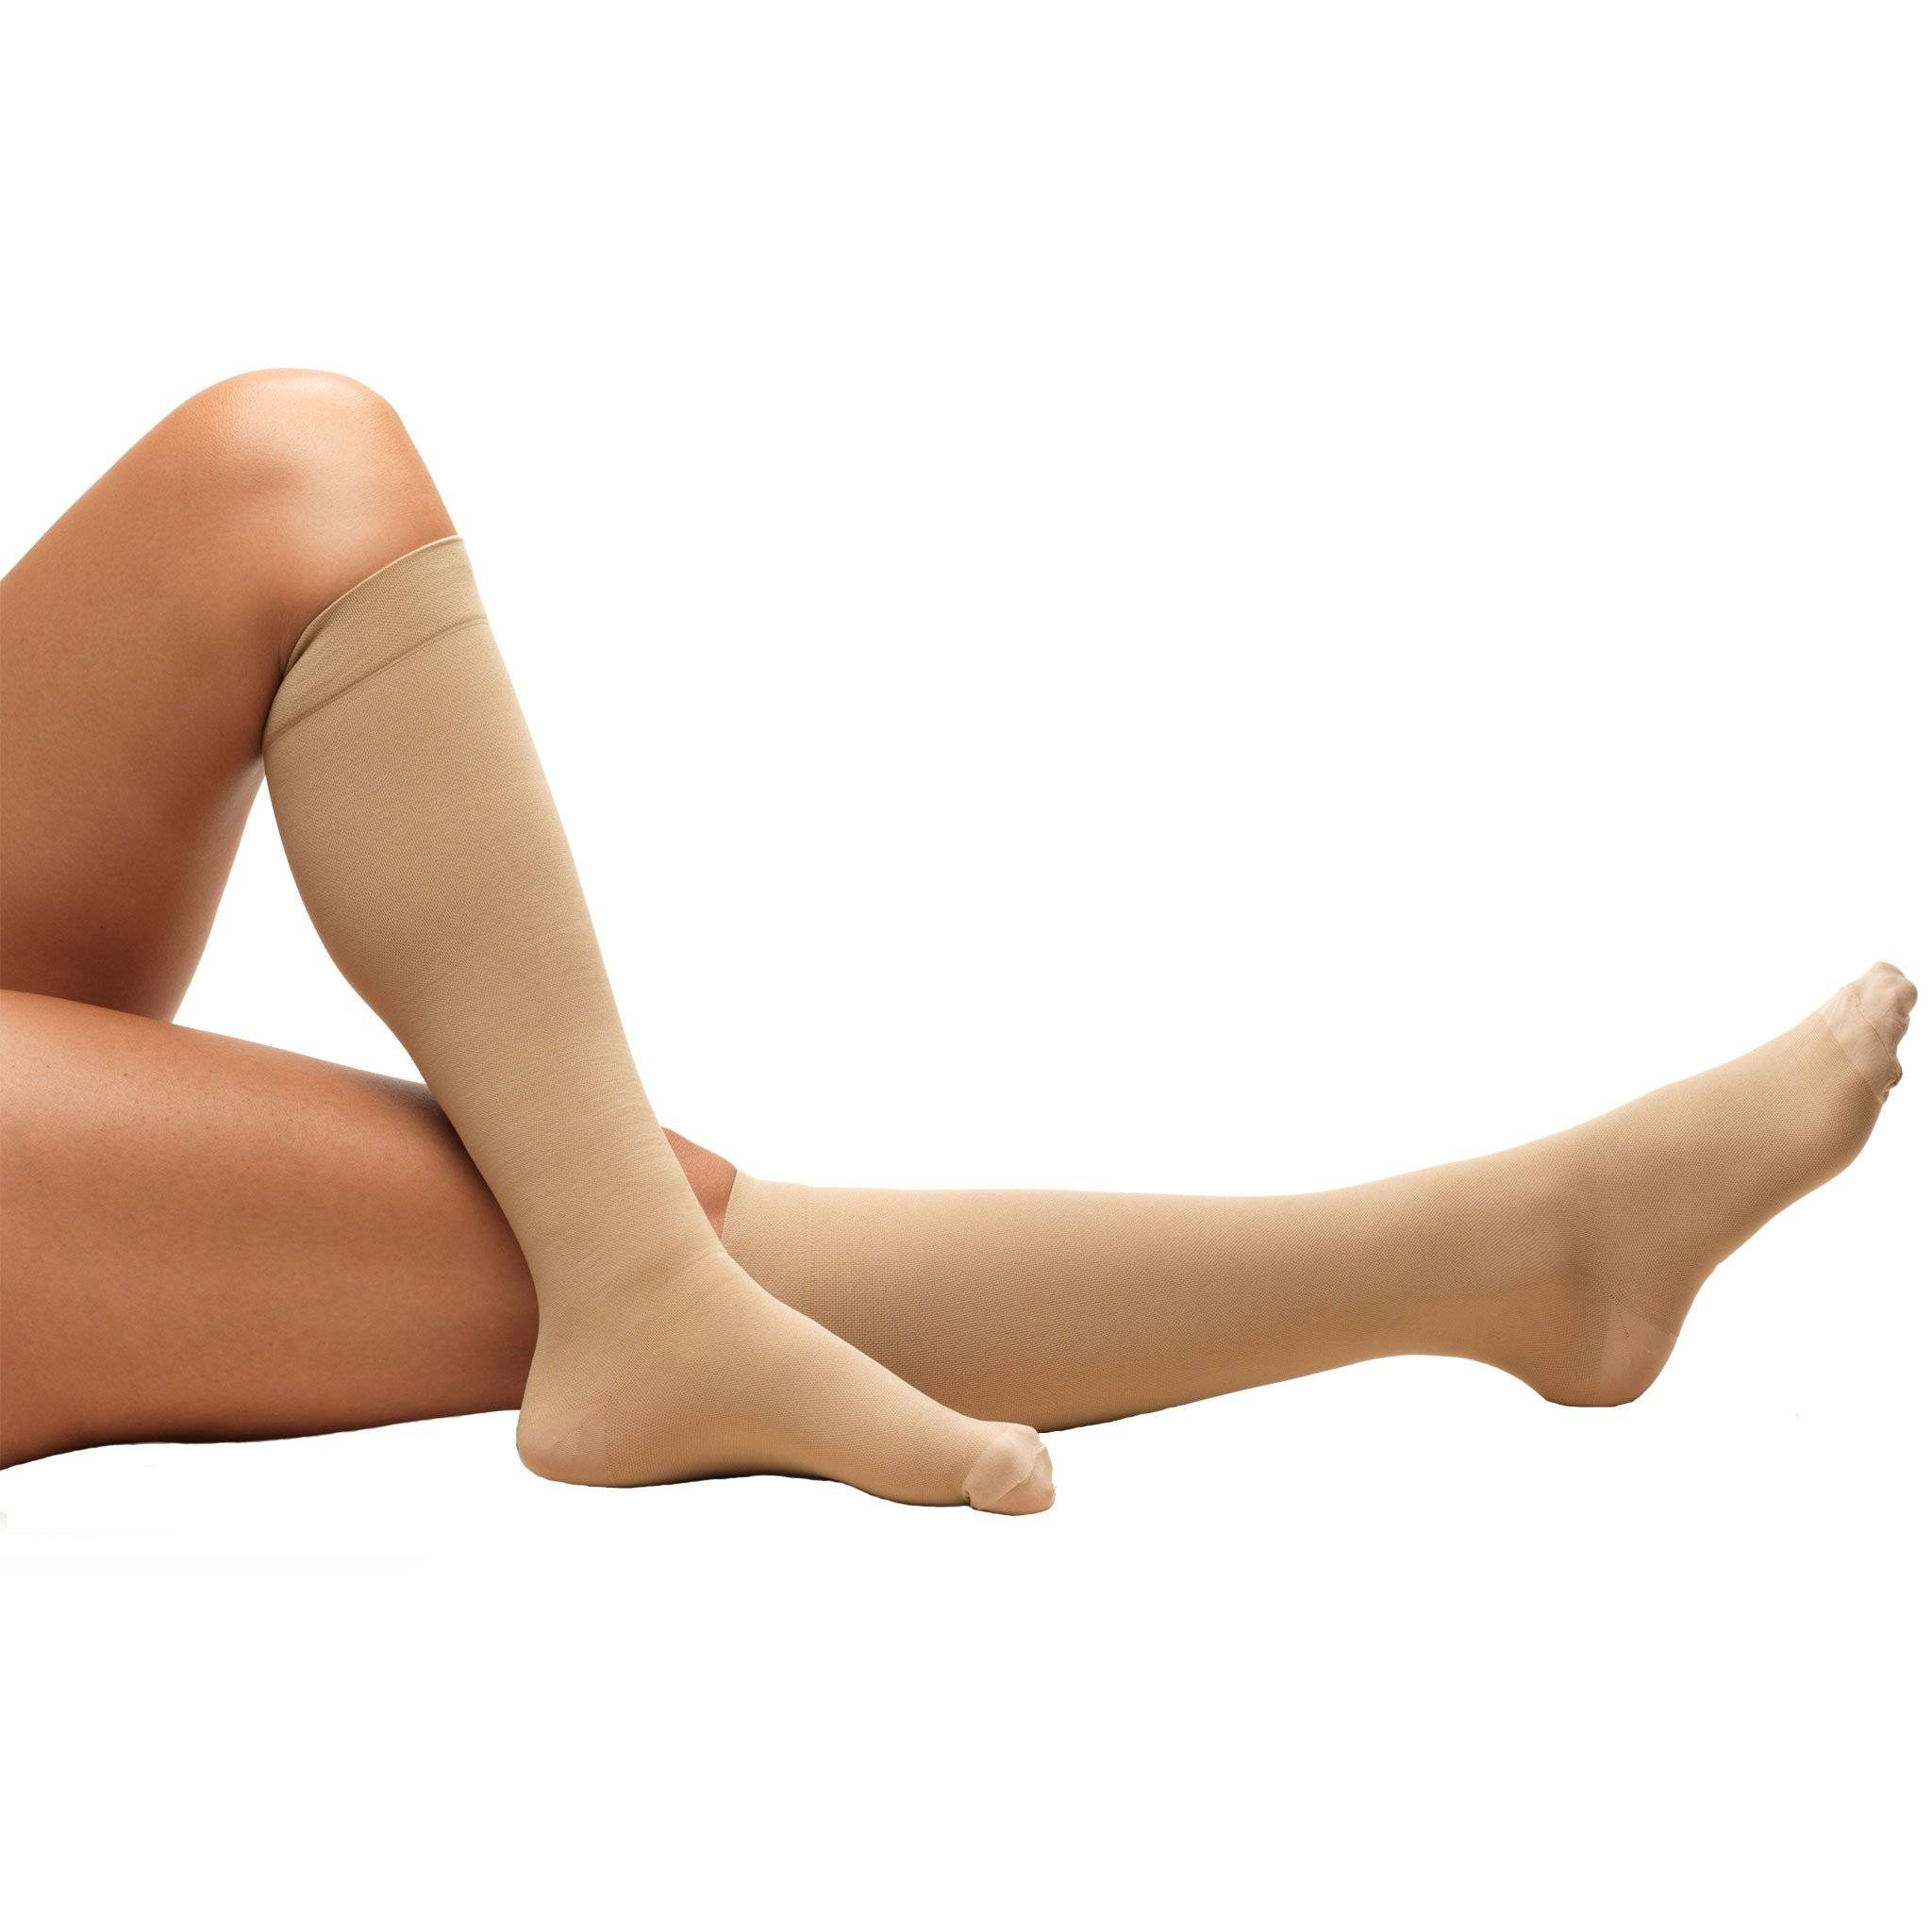 Knee High Closed Toe Anti-Embolism Stockings